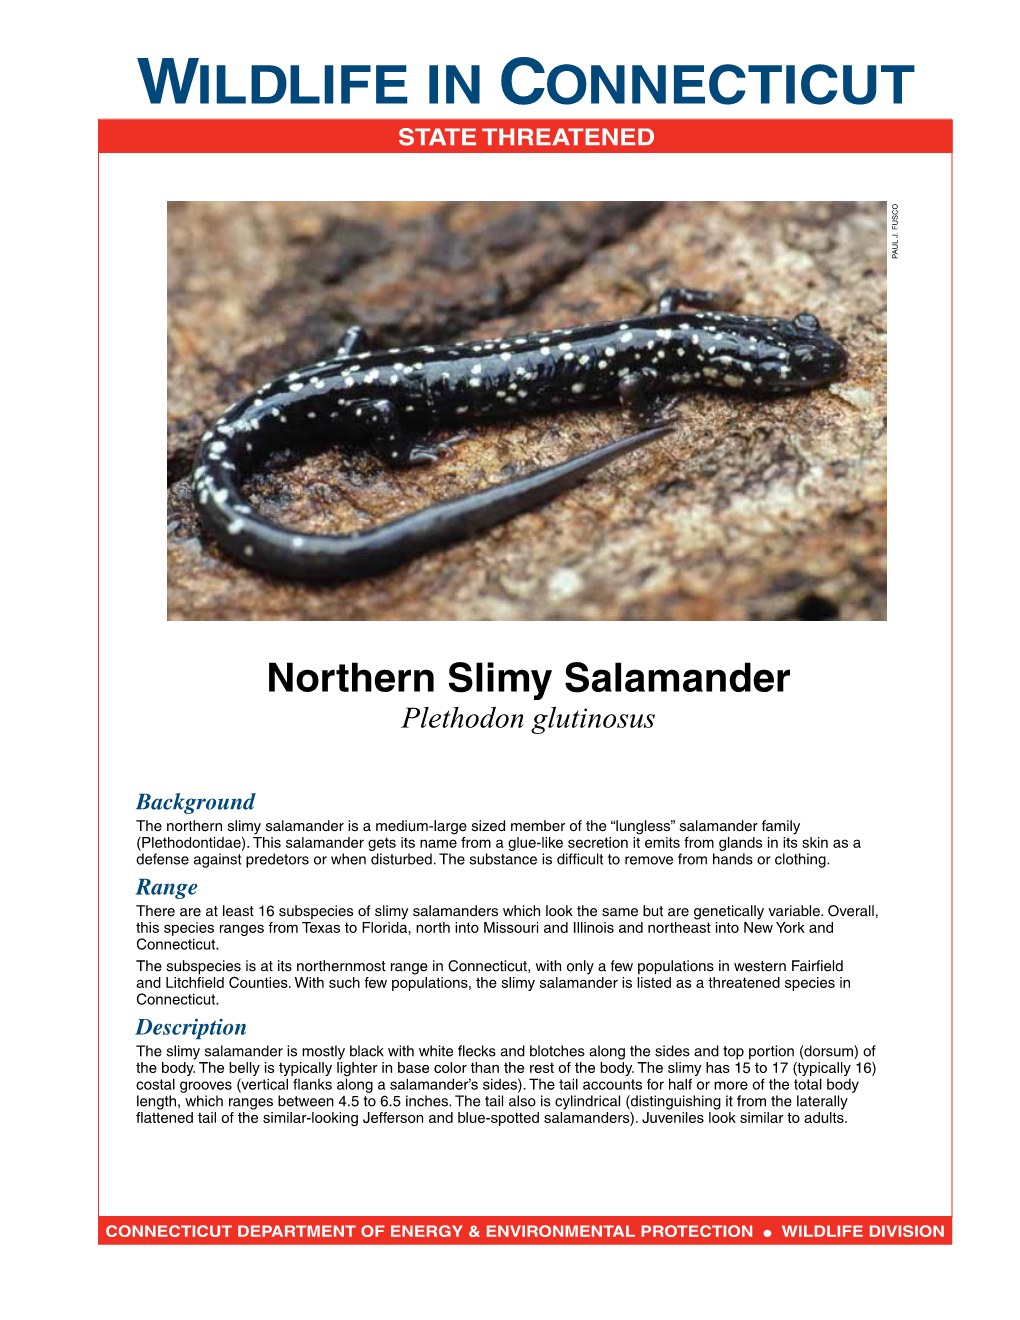 Northern Slimy Salamander Plethodon Glutinosus